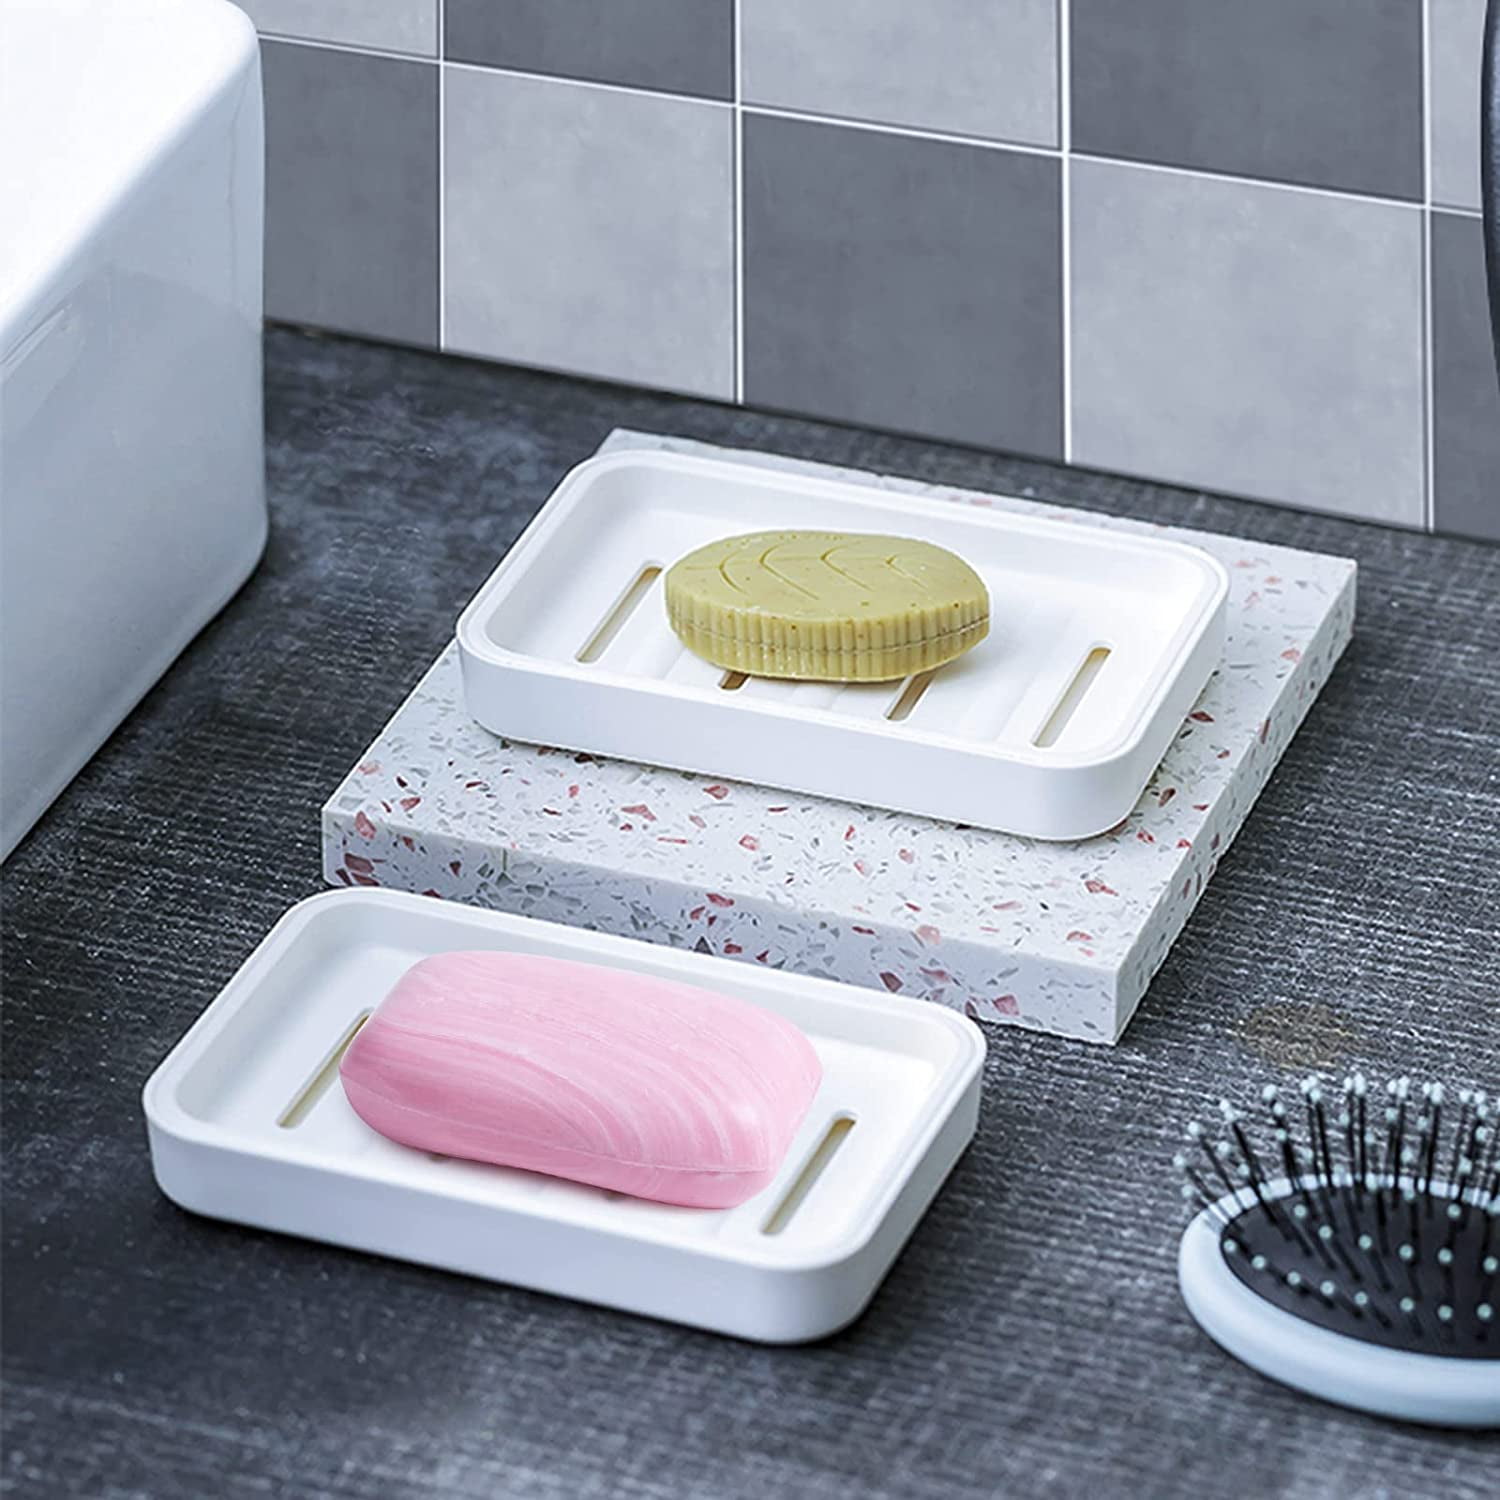 ALIMOTA 2 PCS Silicone Soap Dish,Bar Soap Holder,Soap Dishes for  Bathroom,Draining Soap Dishes,Dish Sponge Holder,Soap Tray.